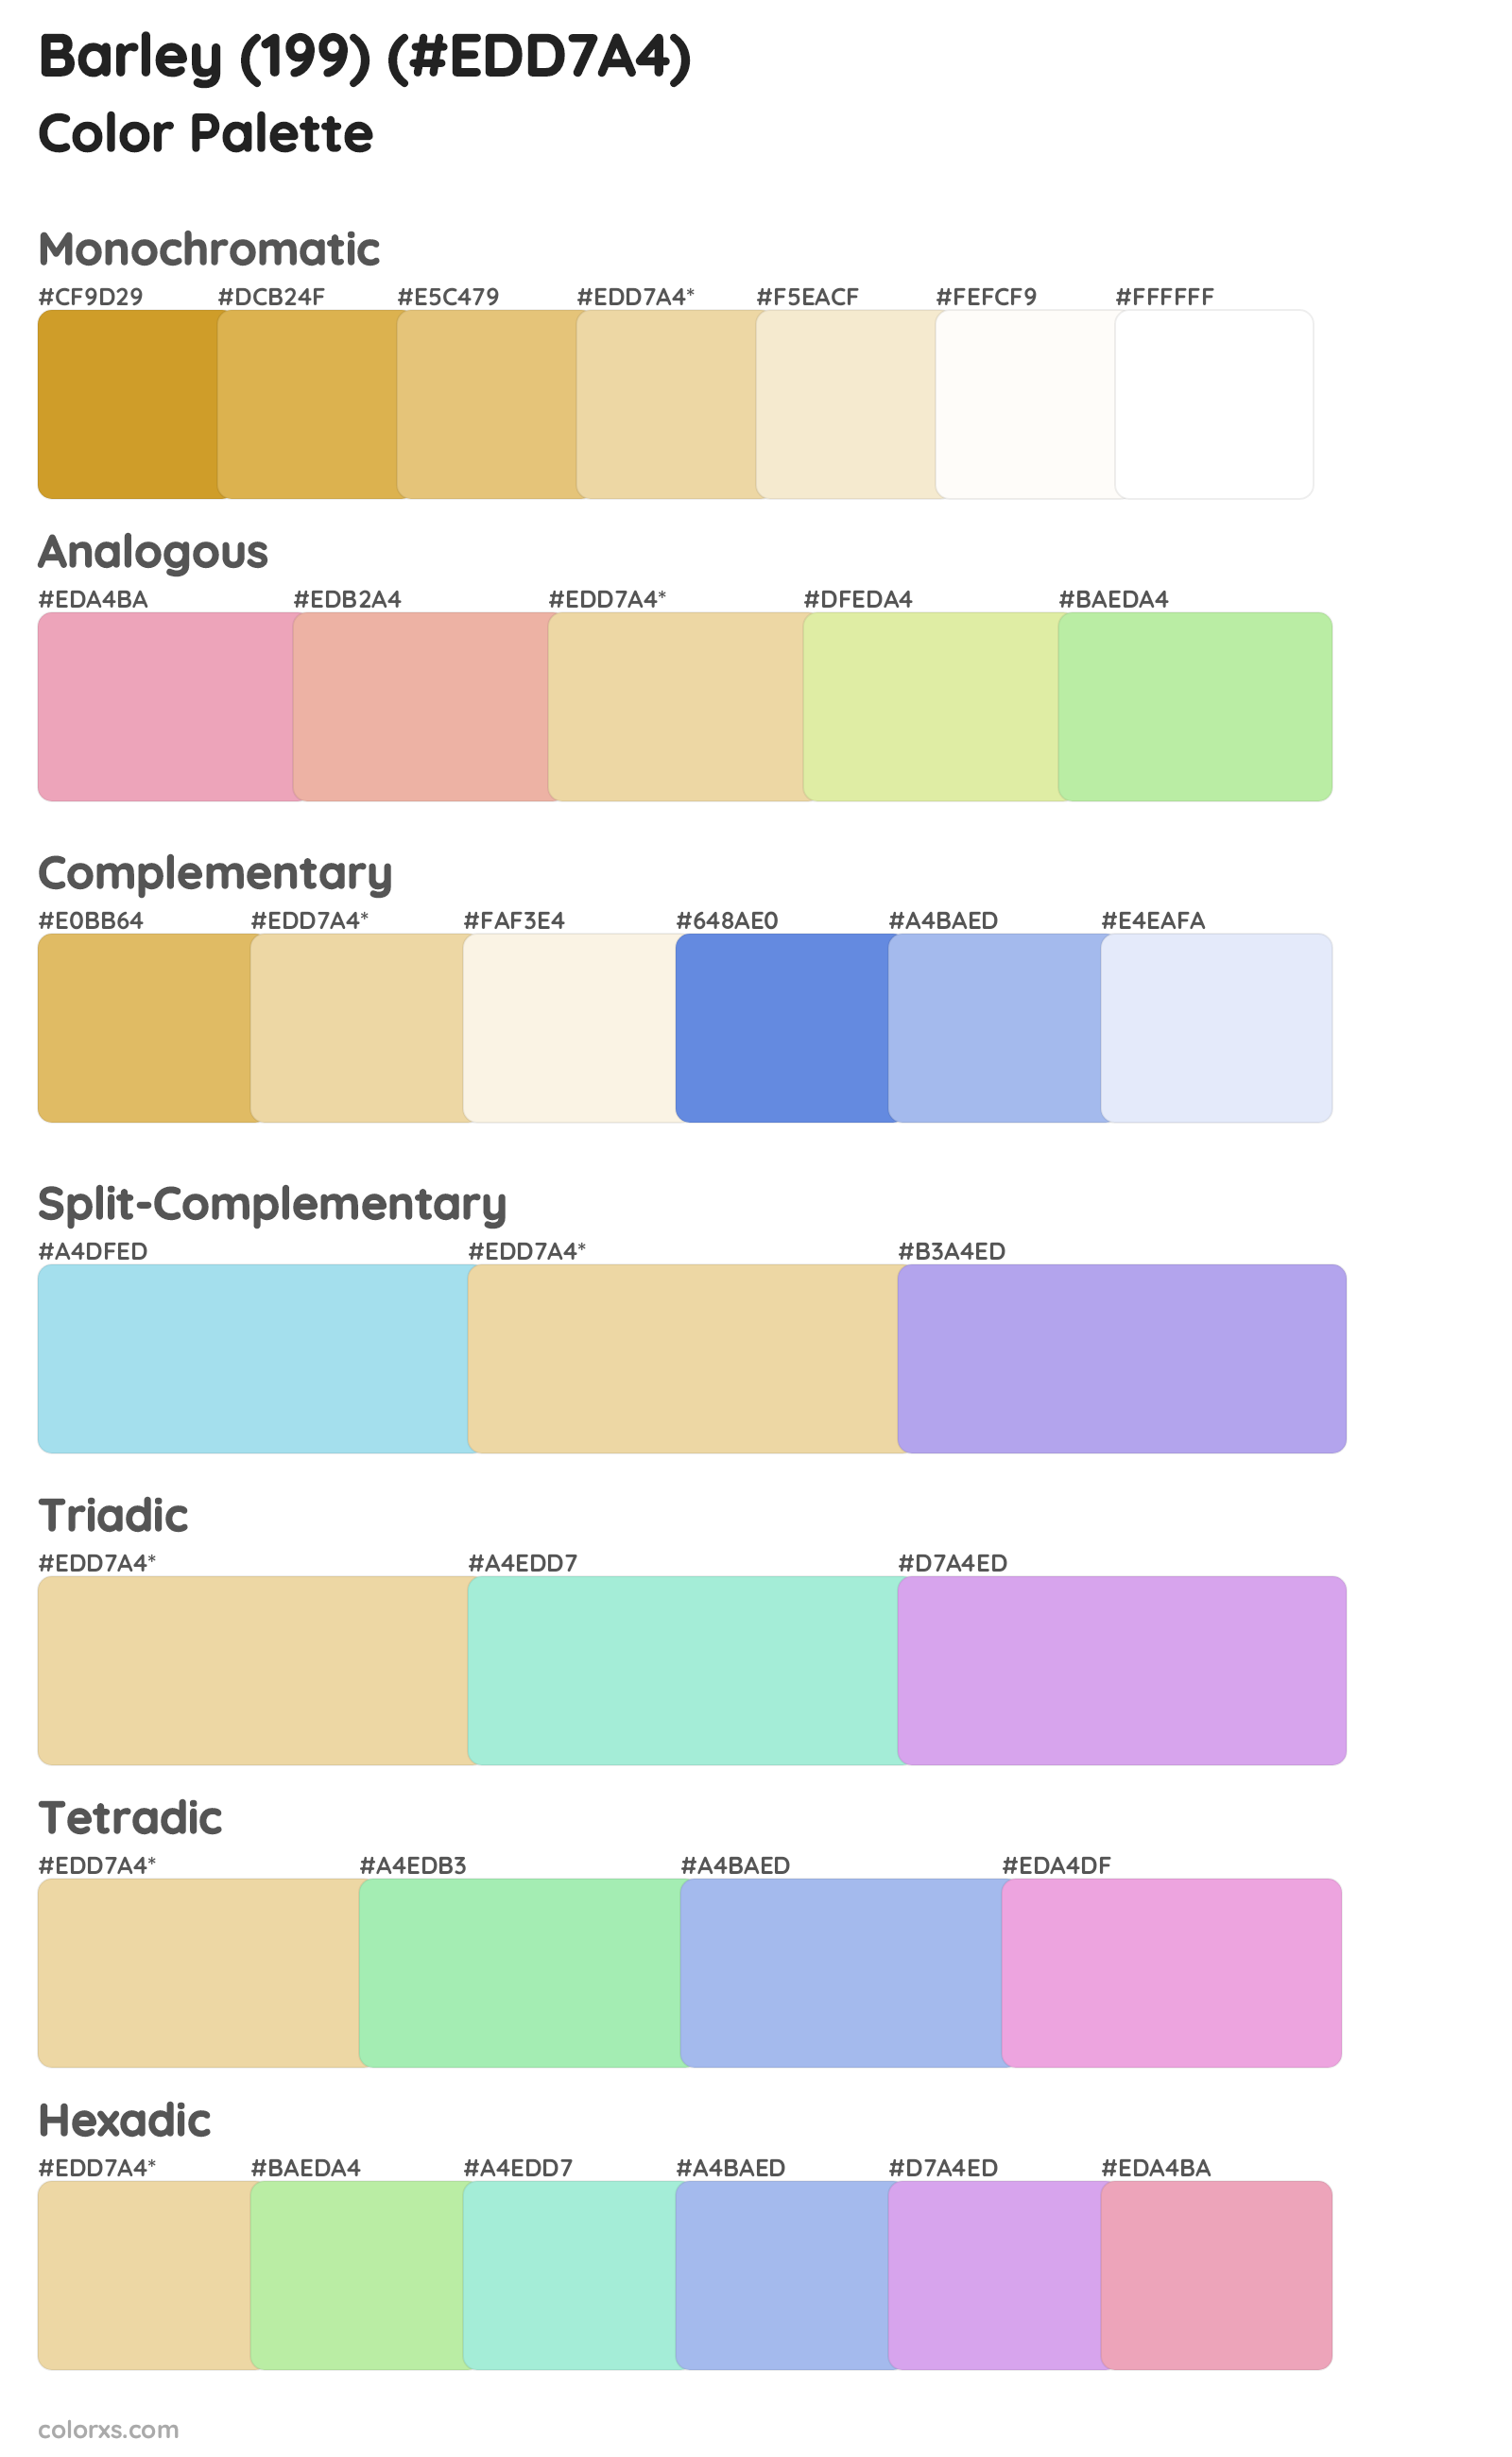 Barley (199) Color Scheme Palettes